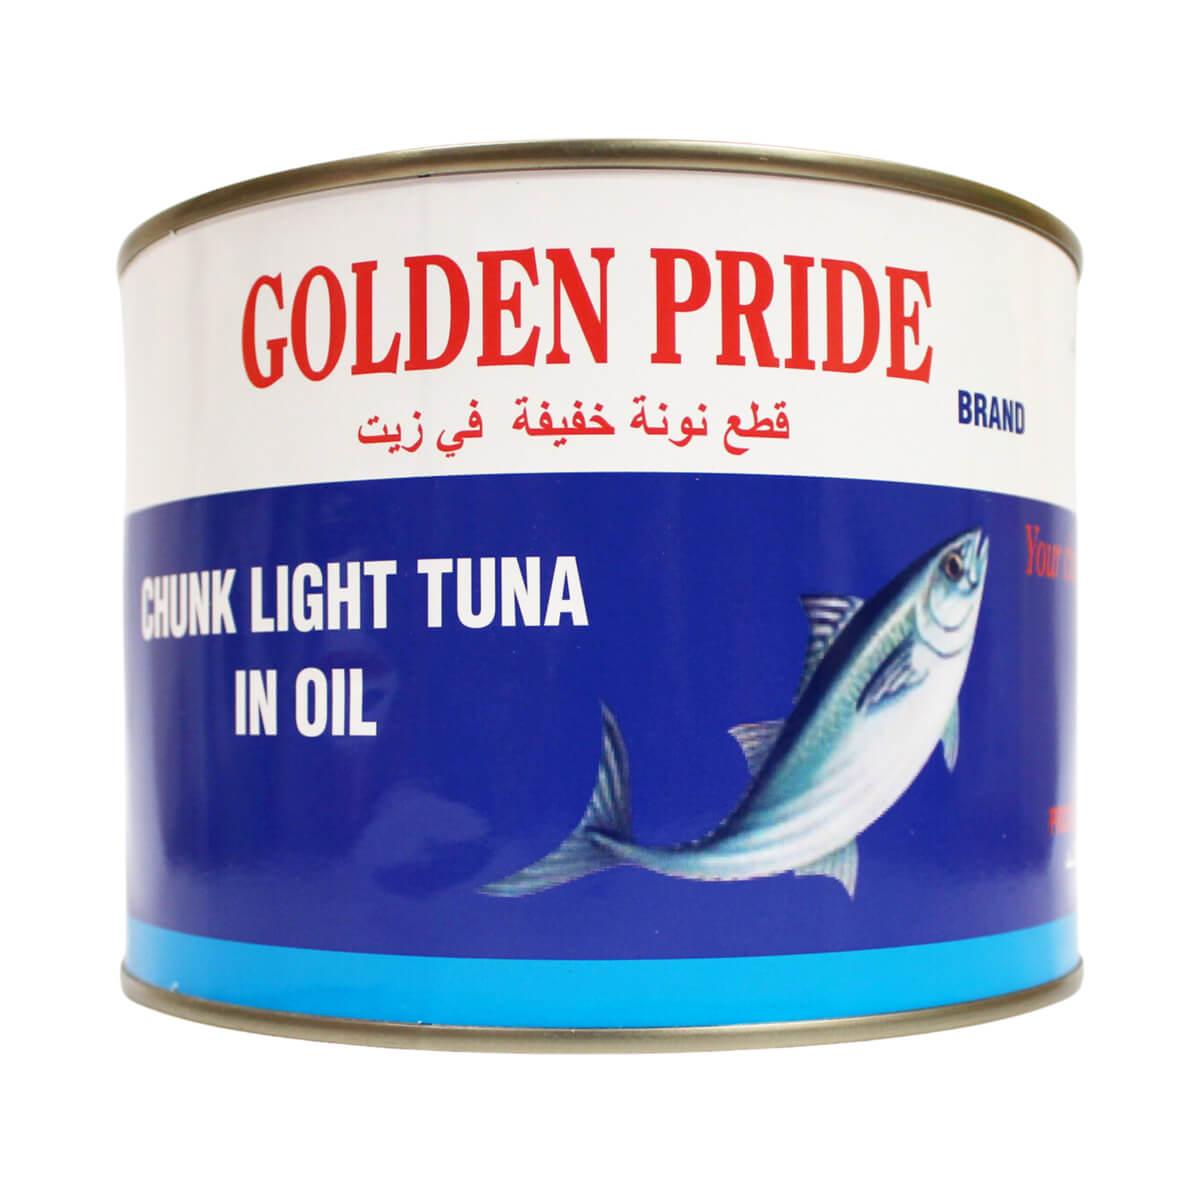 GGO.ae Golden Pride Chunk Light Tuna in Oil - 6x1.7kg